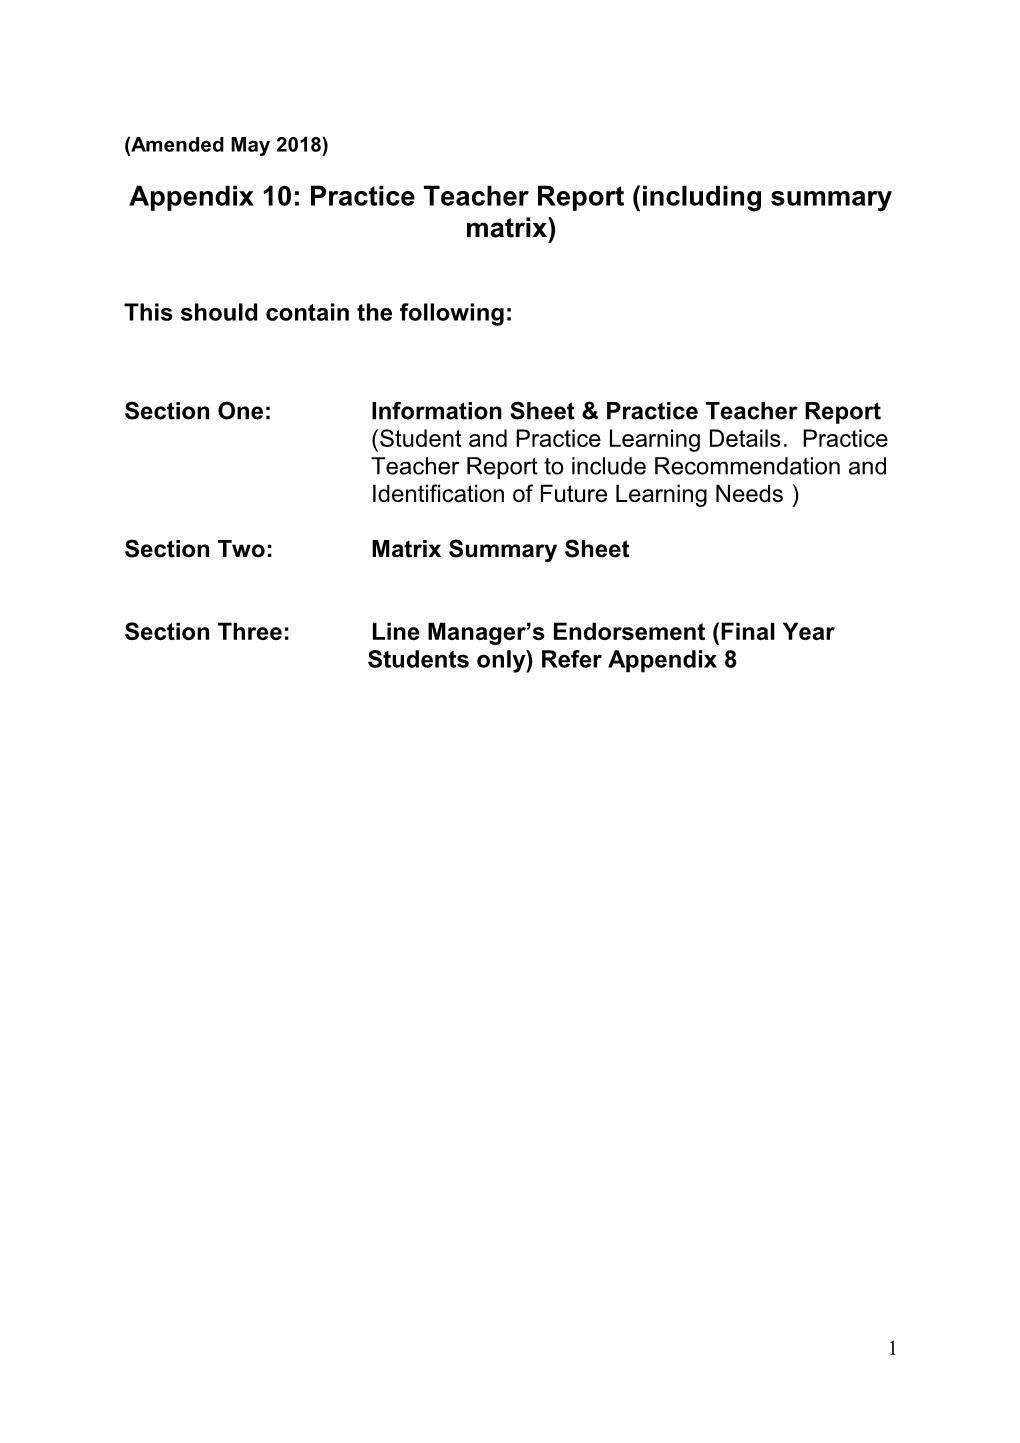 Appendix 10: Practice Teacher Report (Including Summary Matrix)